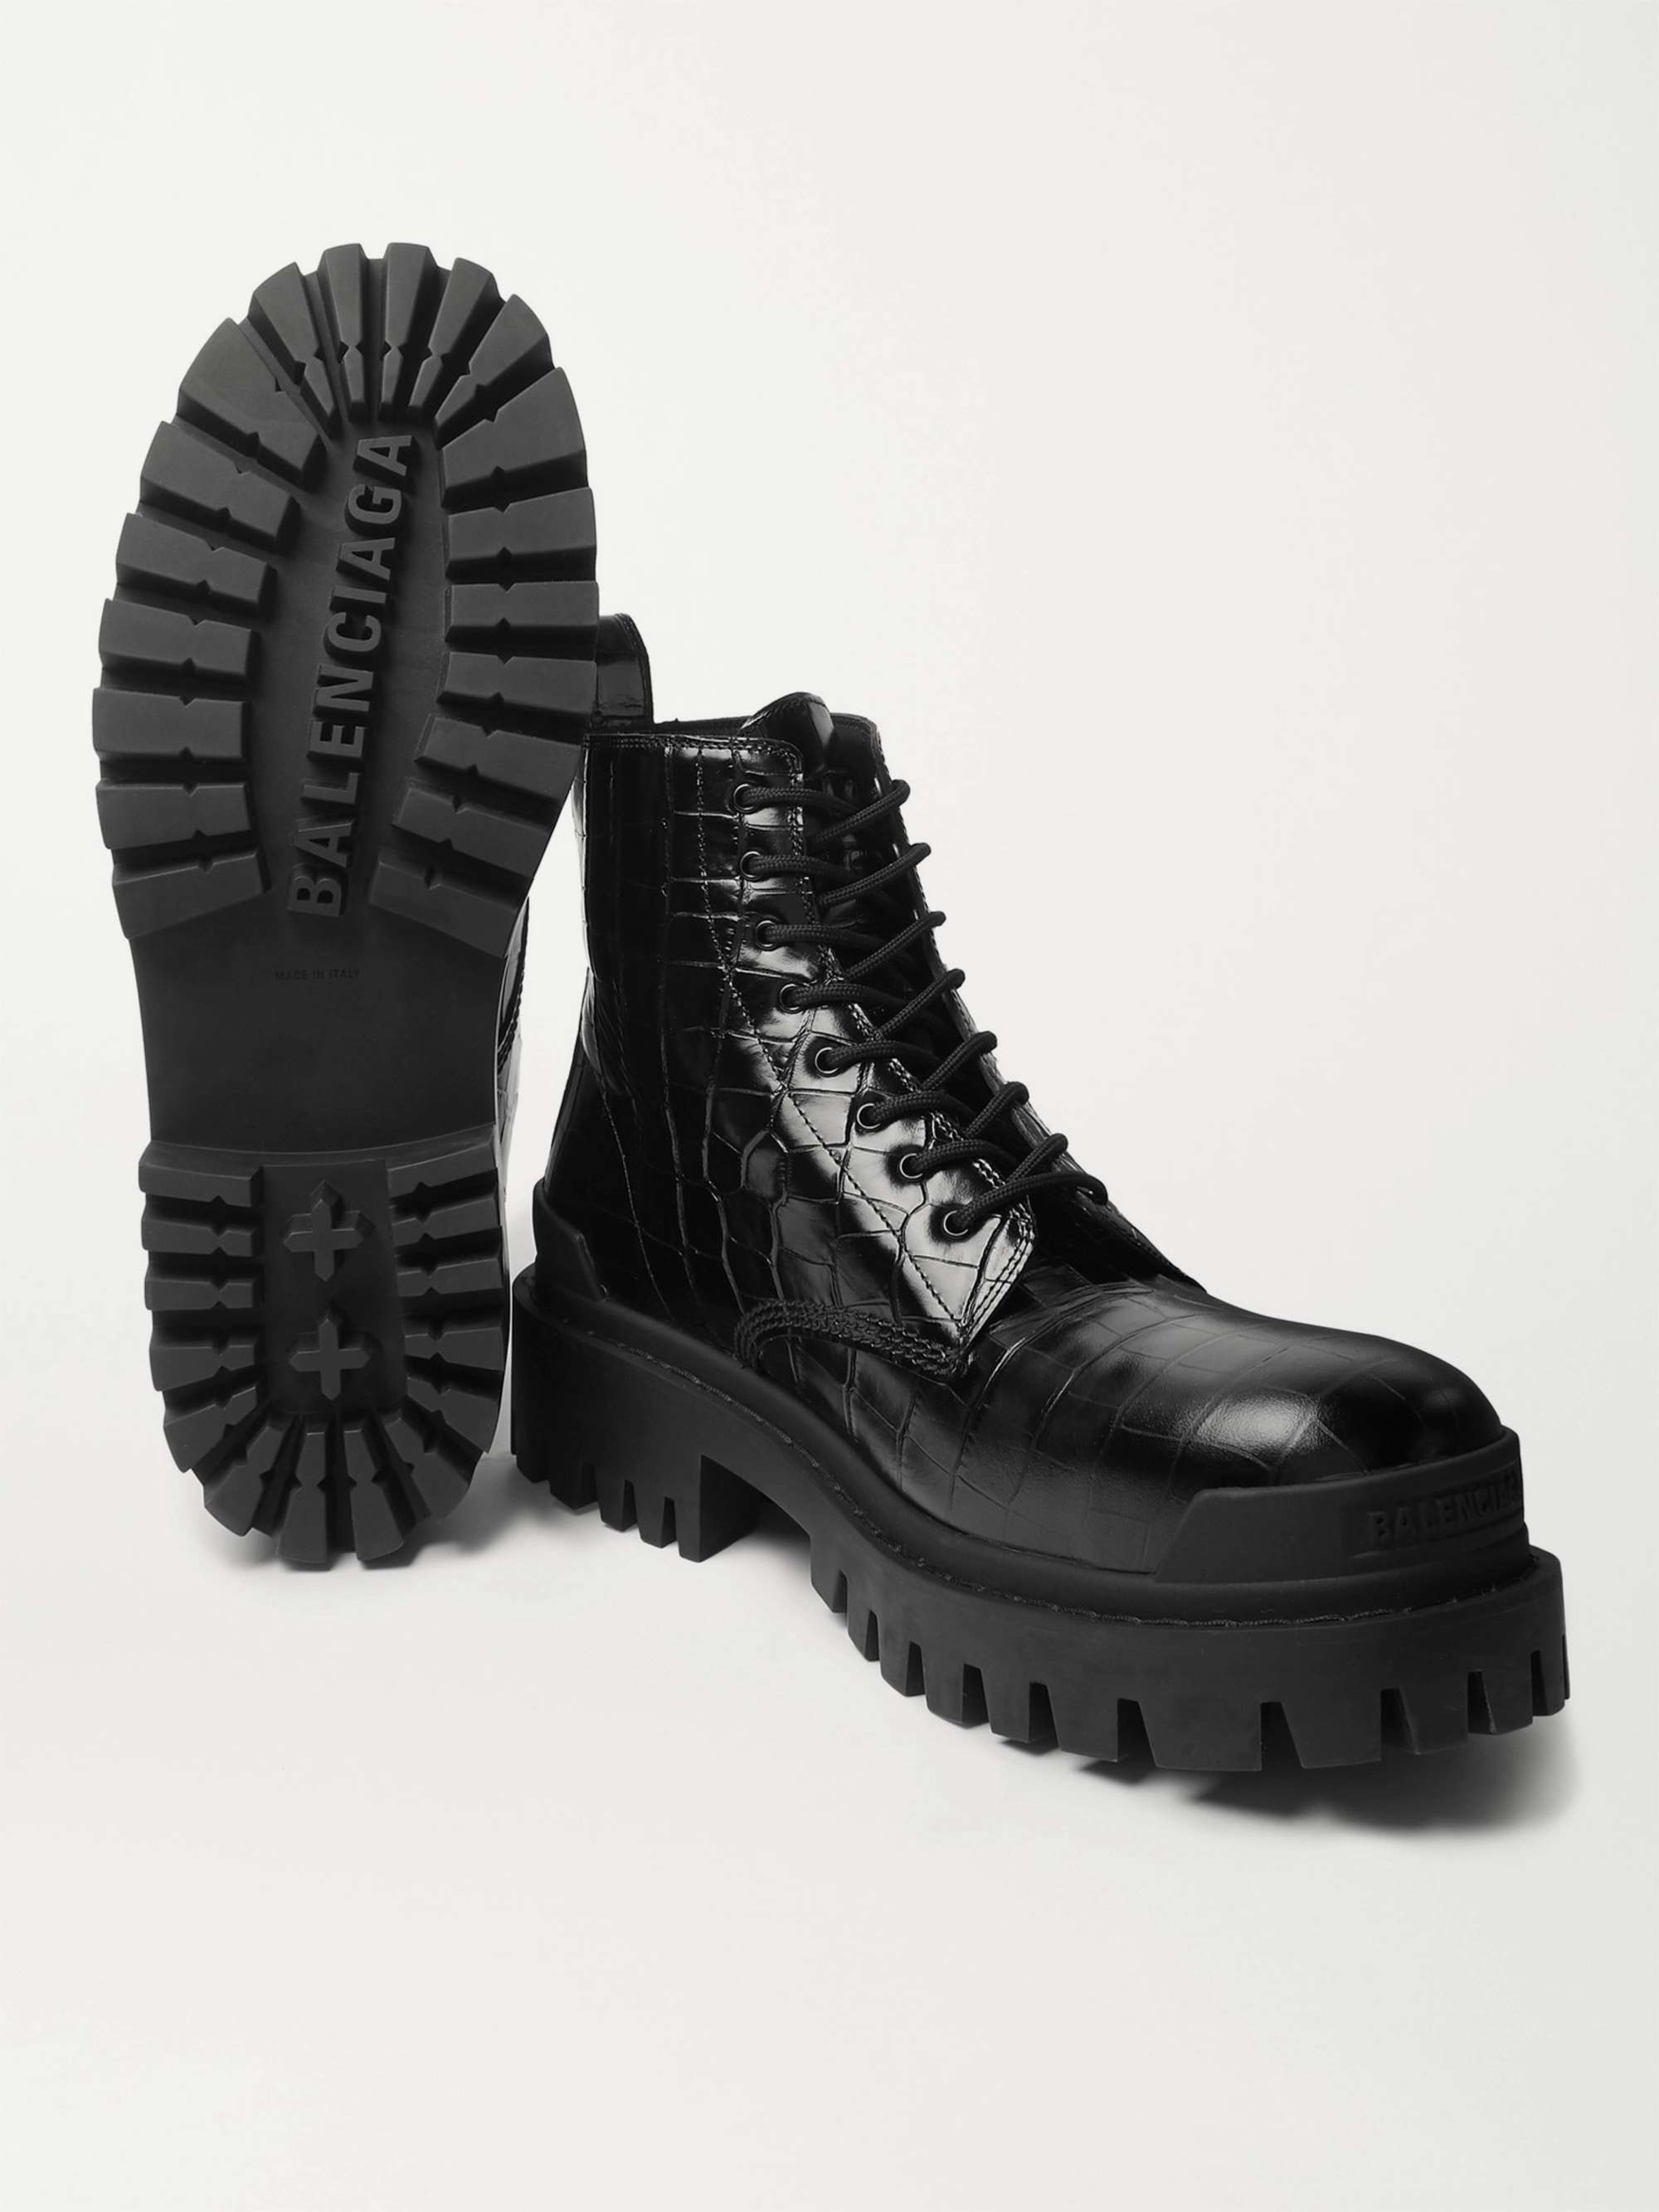 NIB BALENCIAGA Navy Blue Leather Lace Up Combat Boots Size 841 Fits 942  1220  eBay